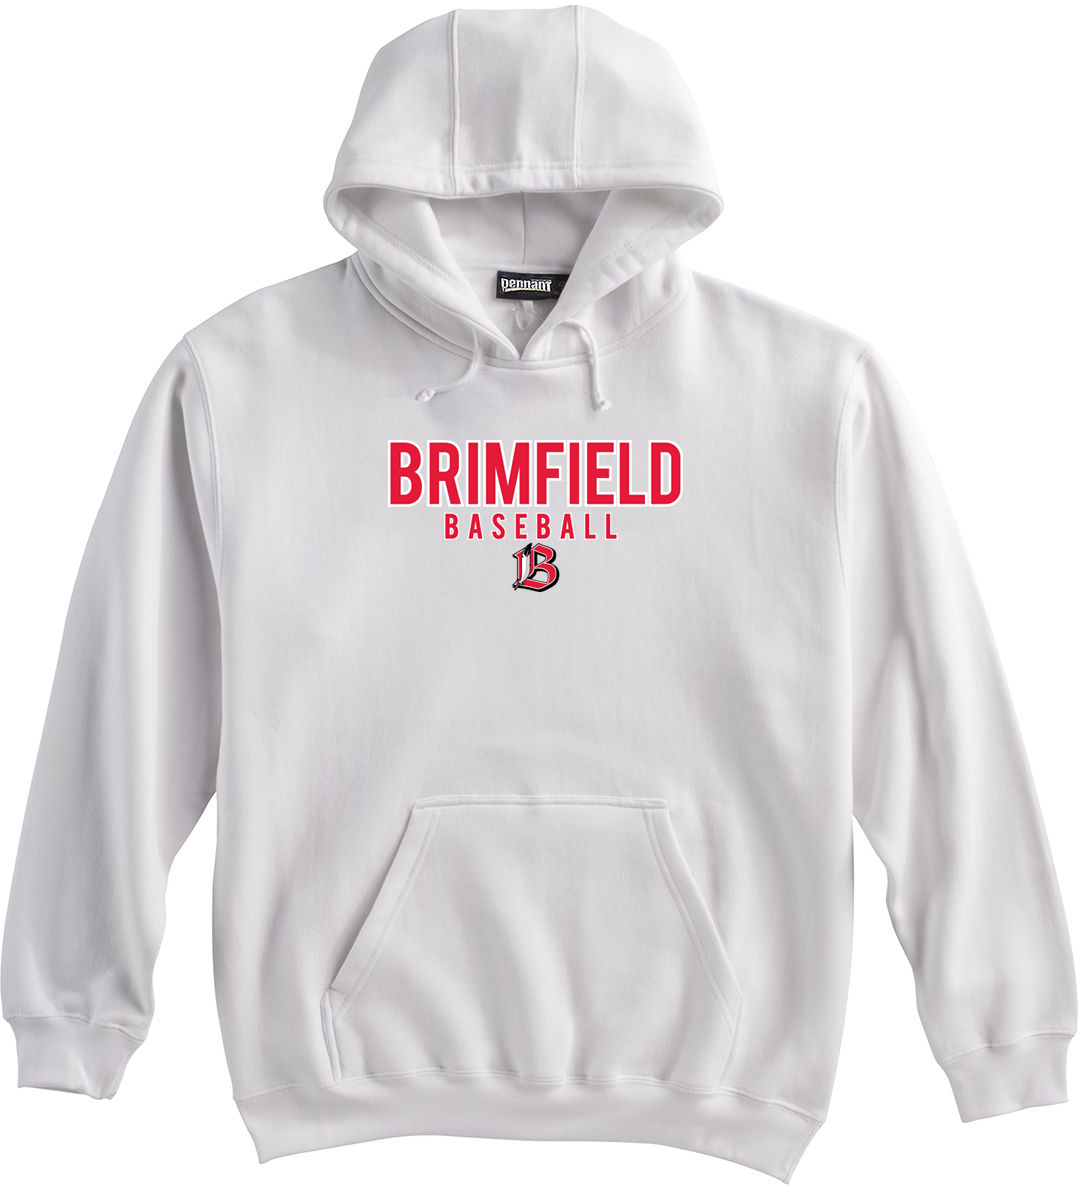 Brimfield Baseball Sweatshirt